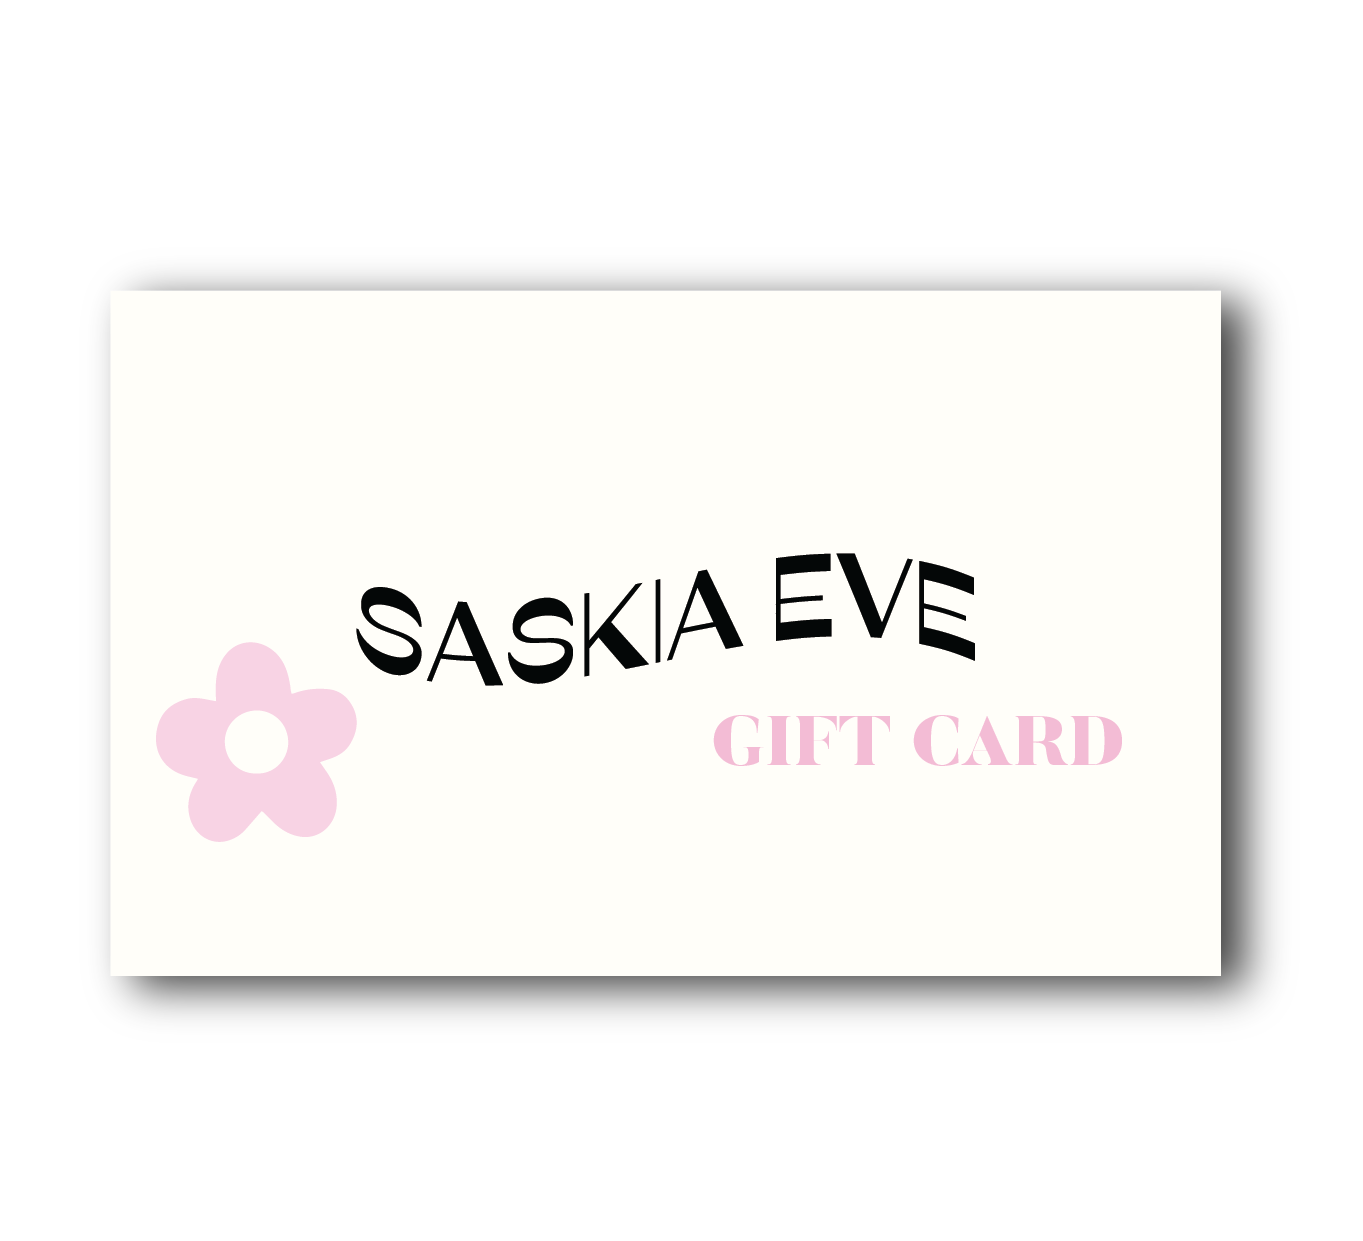 Gift Card - Saskia Eve